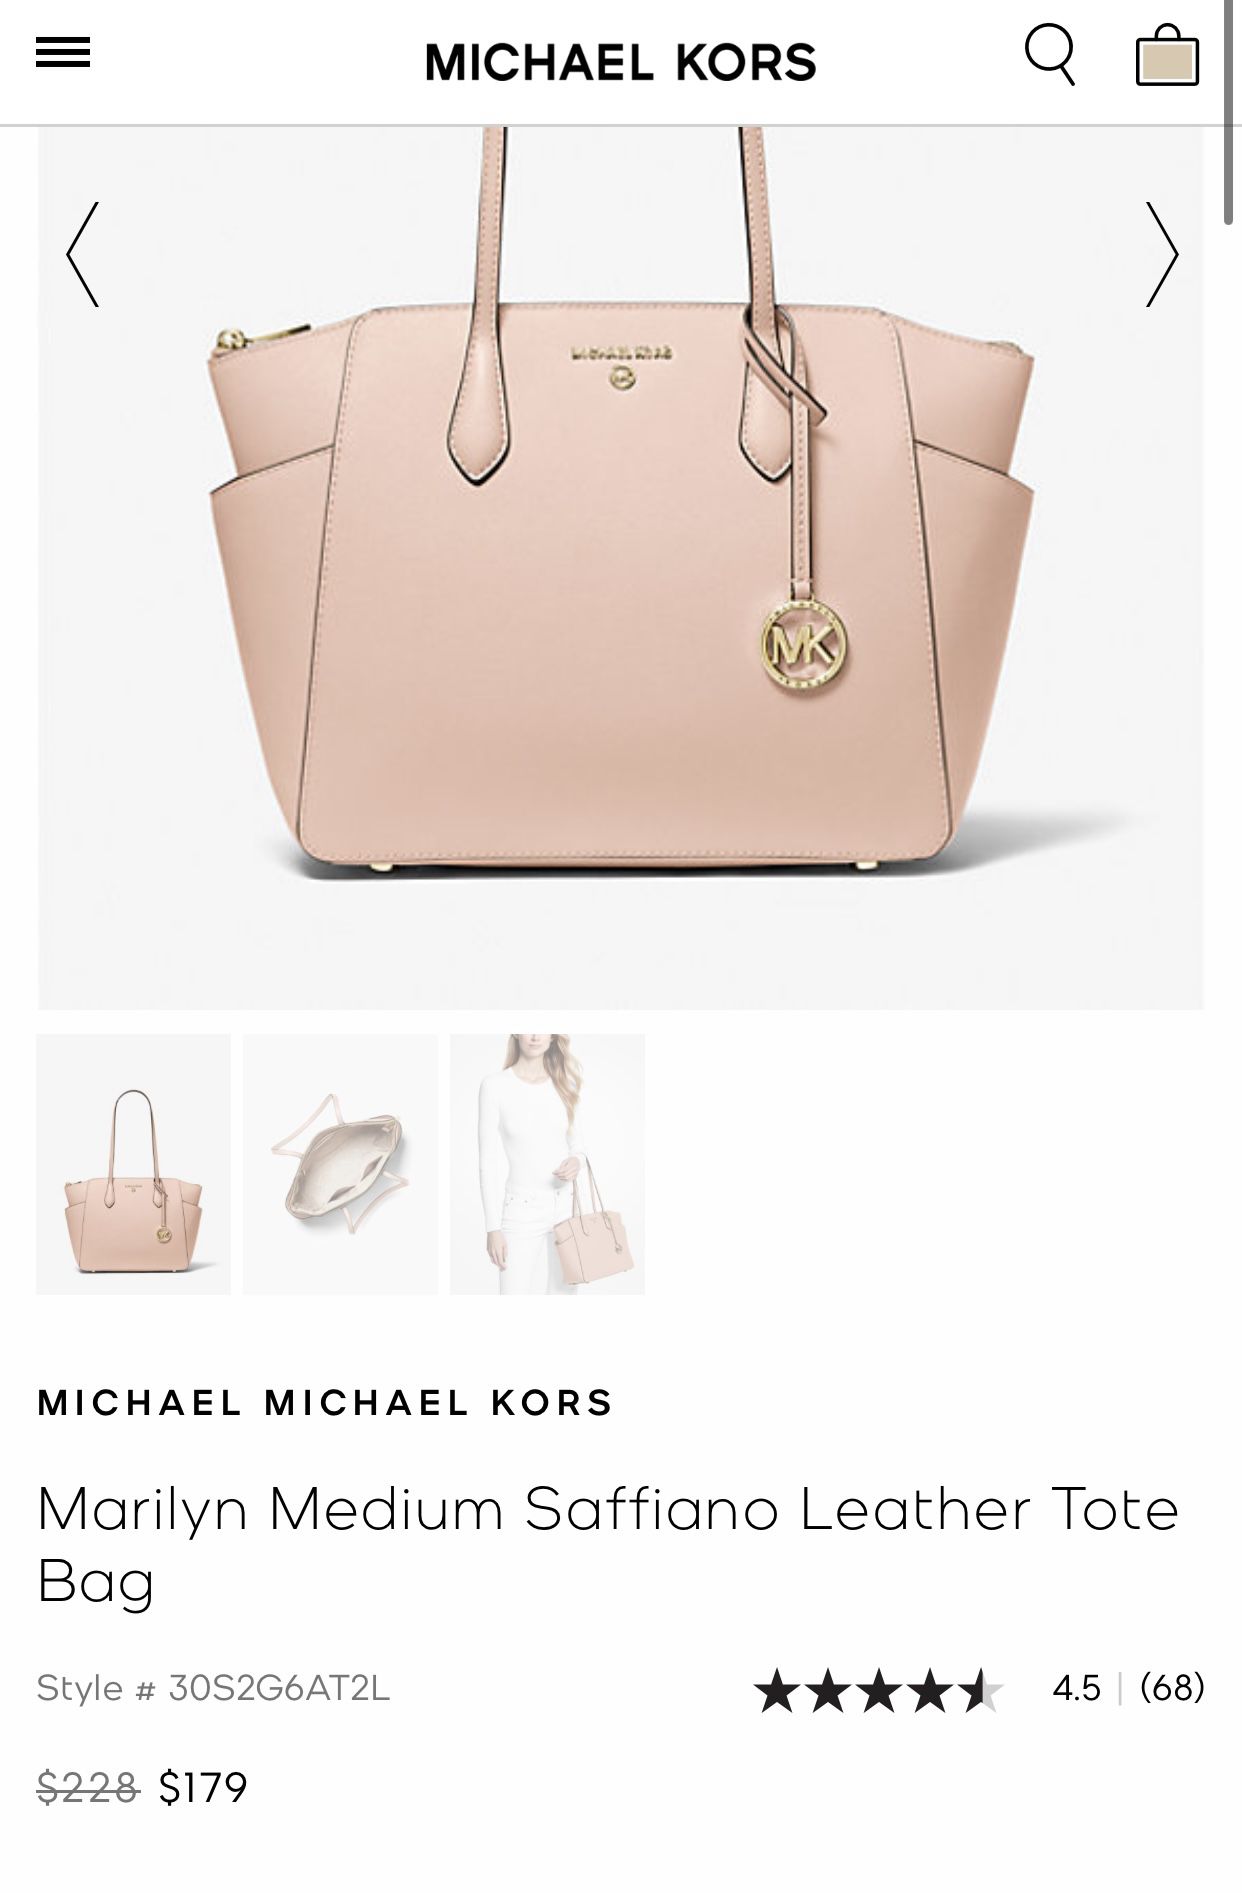 Michael Kors Marilyn Medium Saffiano Leather Tote Bag - 30S2G6AT2L